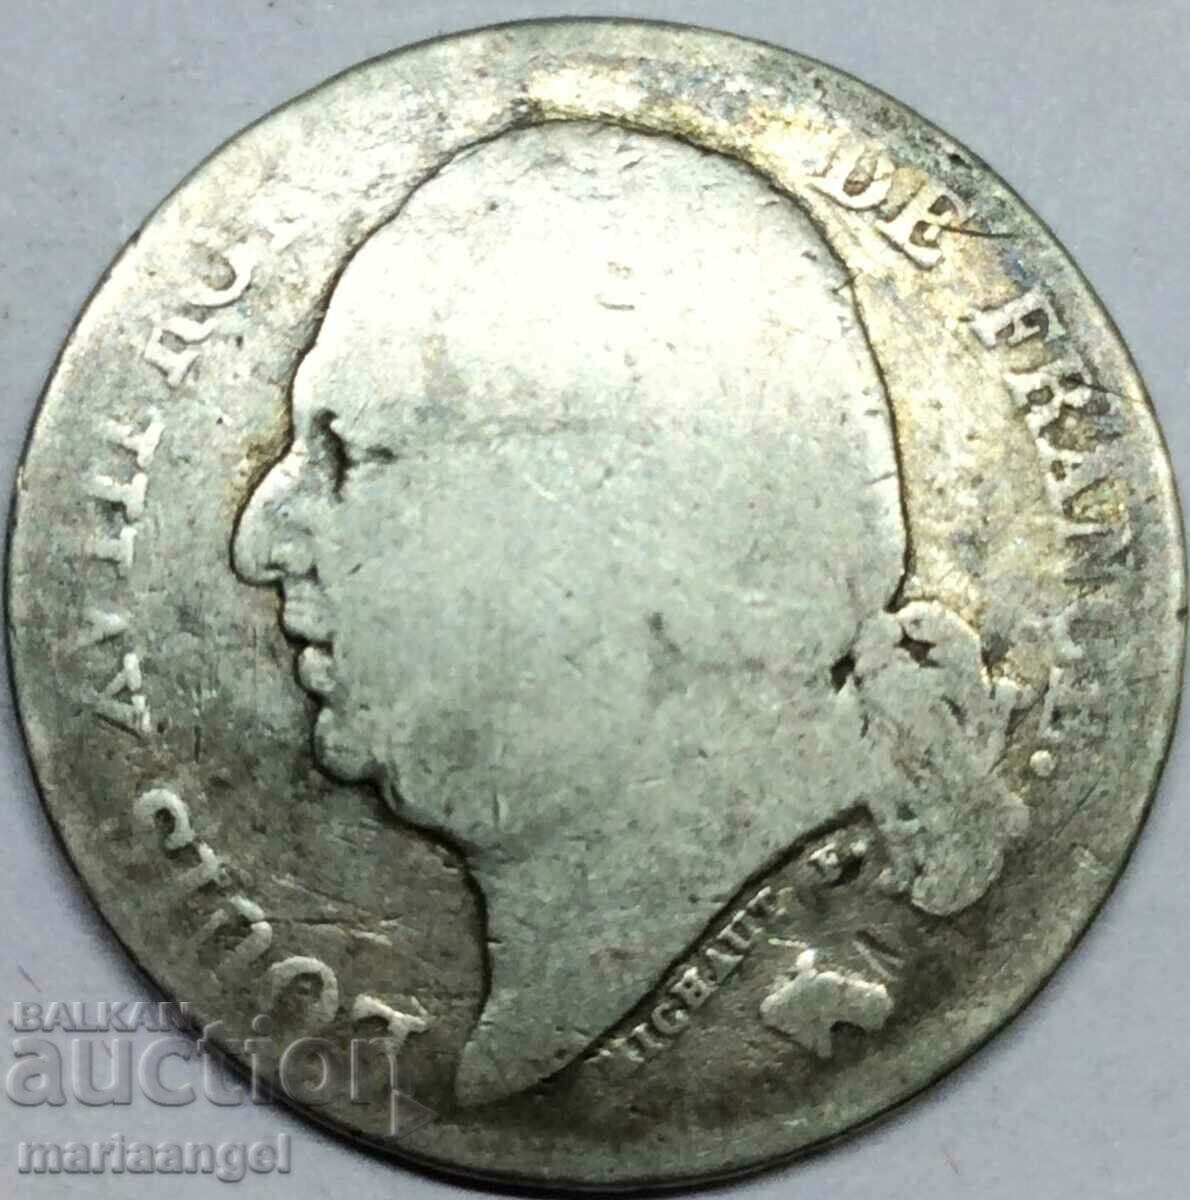 France 1 franc 1819 Louis XVIII silver - excl. rare